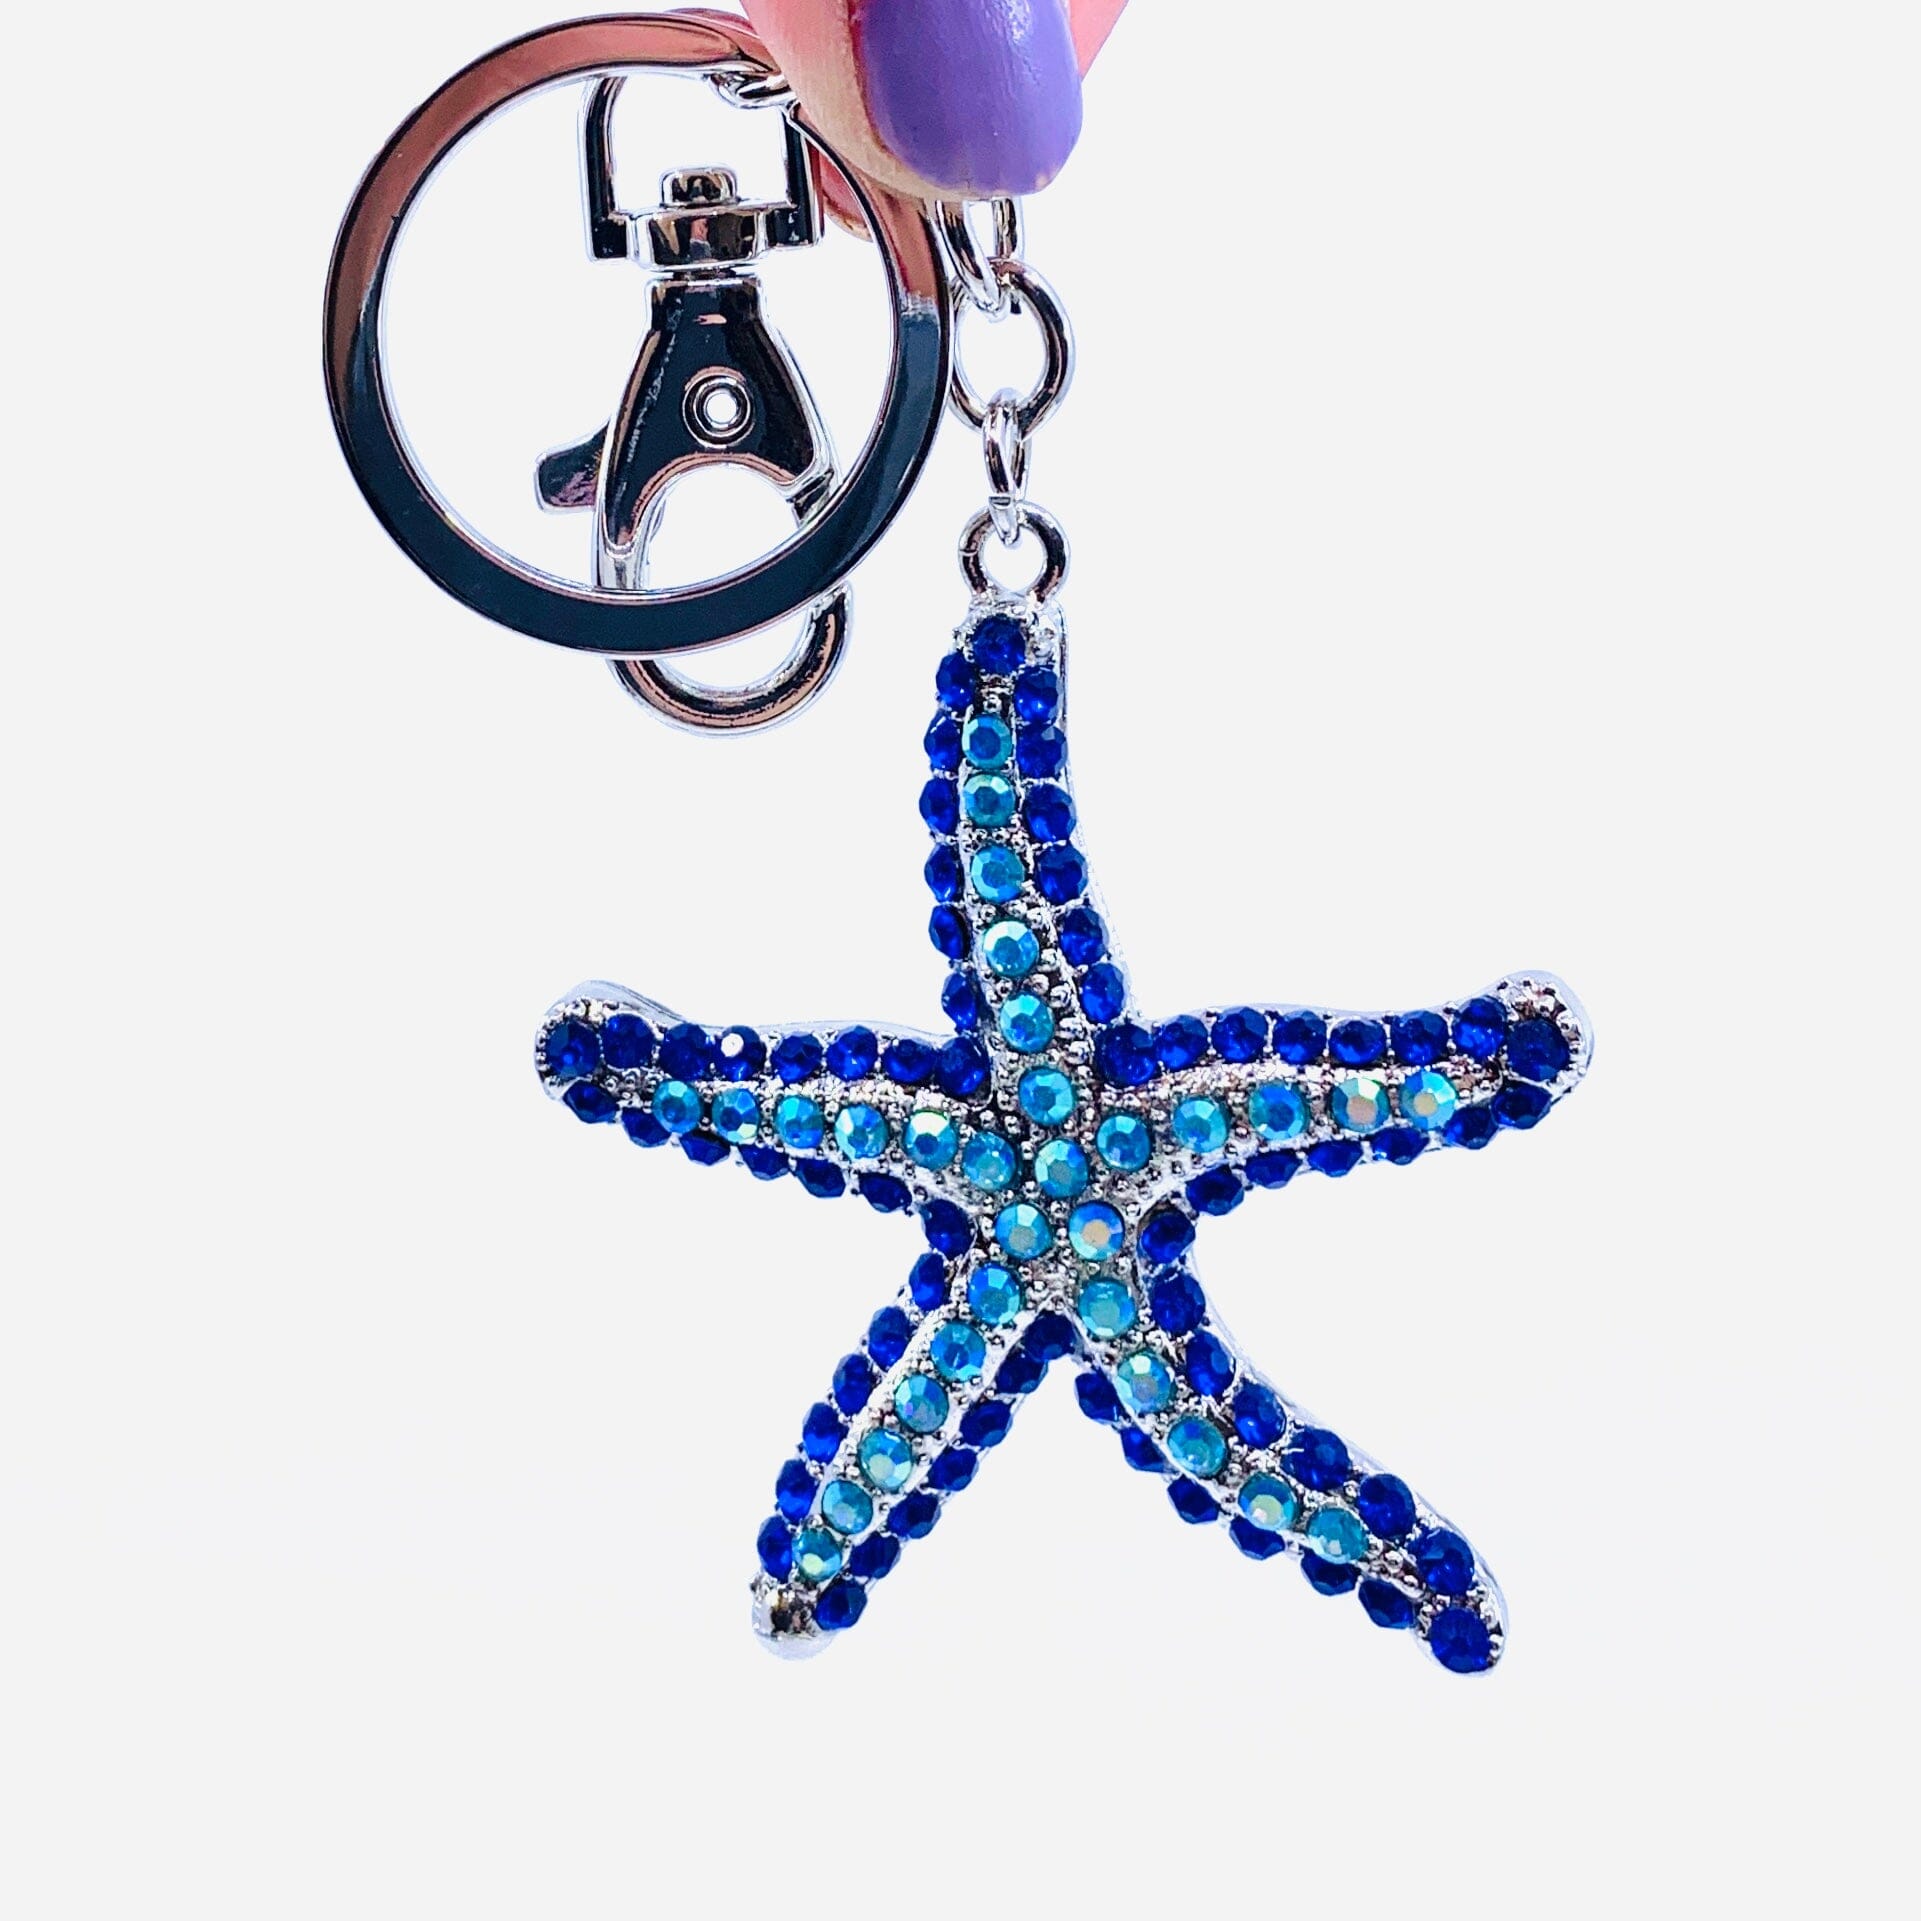 Bejeweled Key Chain 2, Star Fish Accessory Kubla Craft 